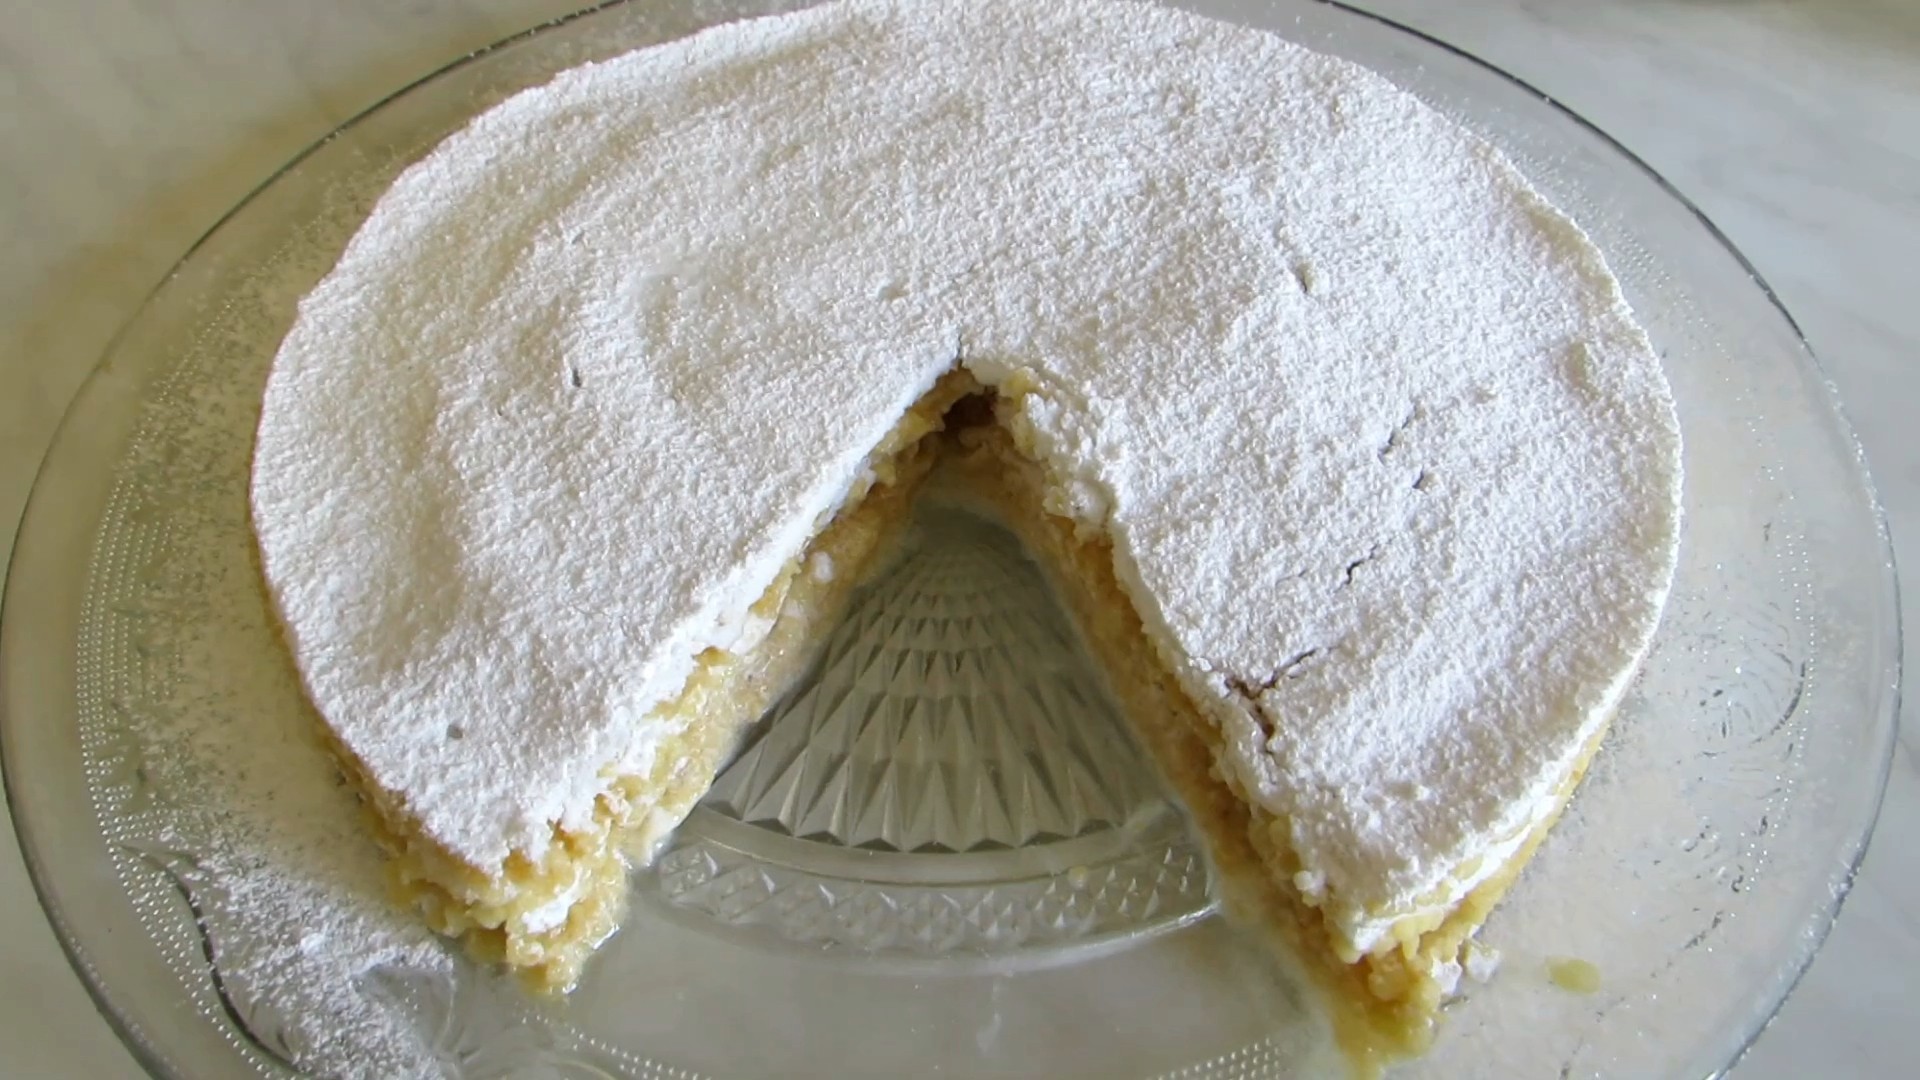 Торт пломбир рецепт с фото пошагово в домашних условиях без выпечки